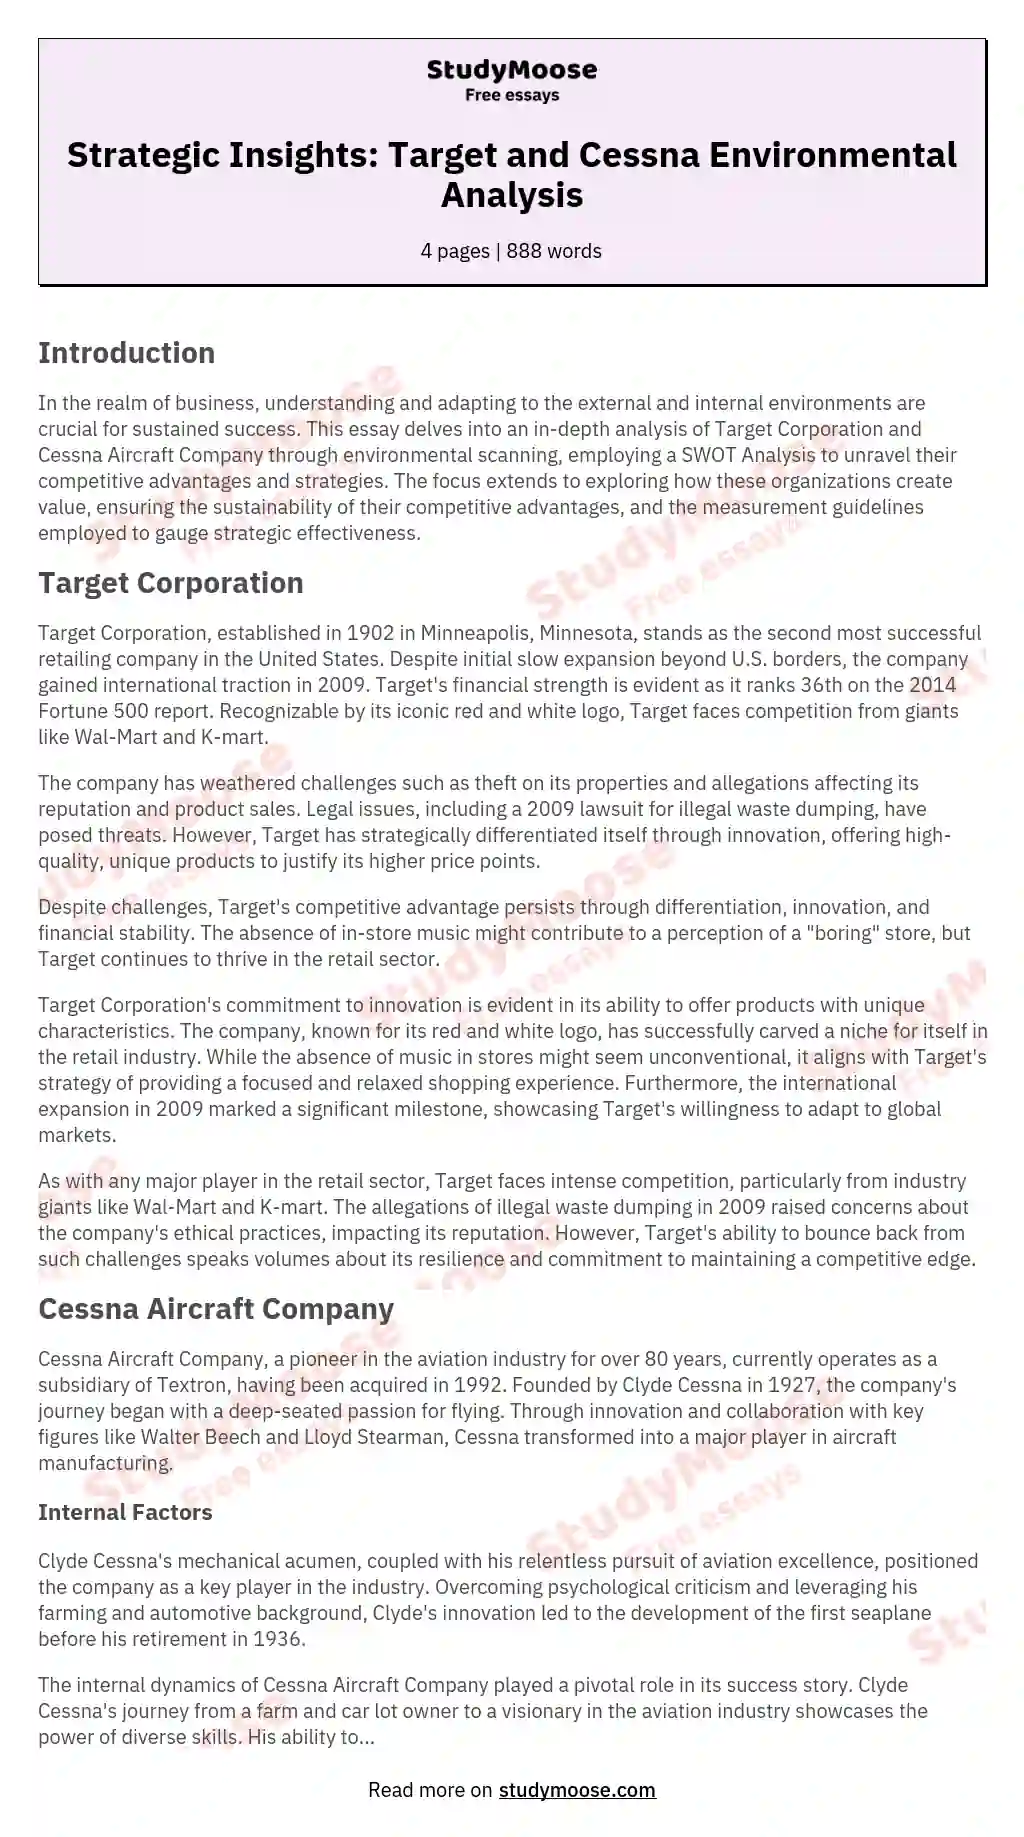 Strategic Insights: Target and Cessna Environmental Analysis essay